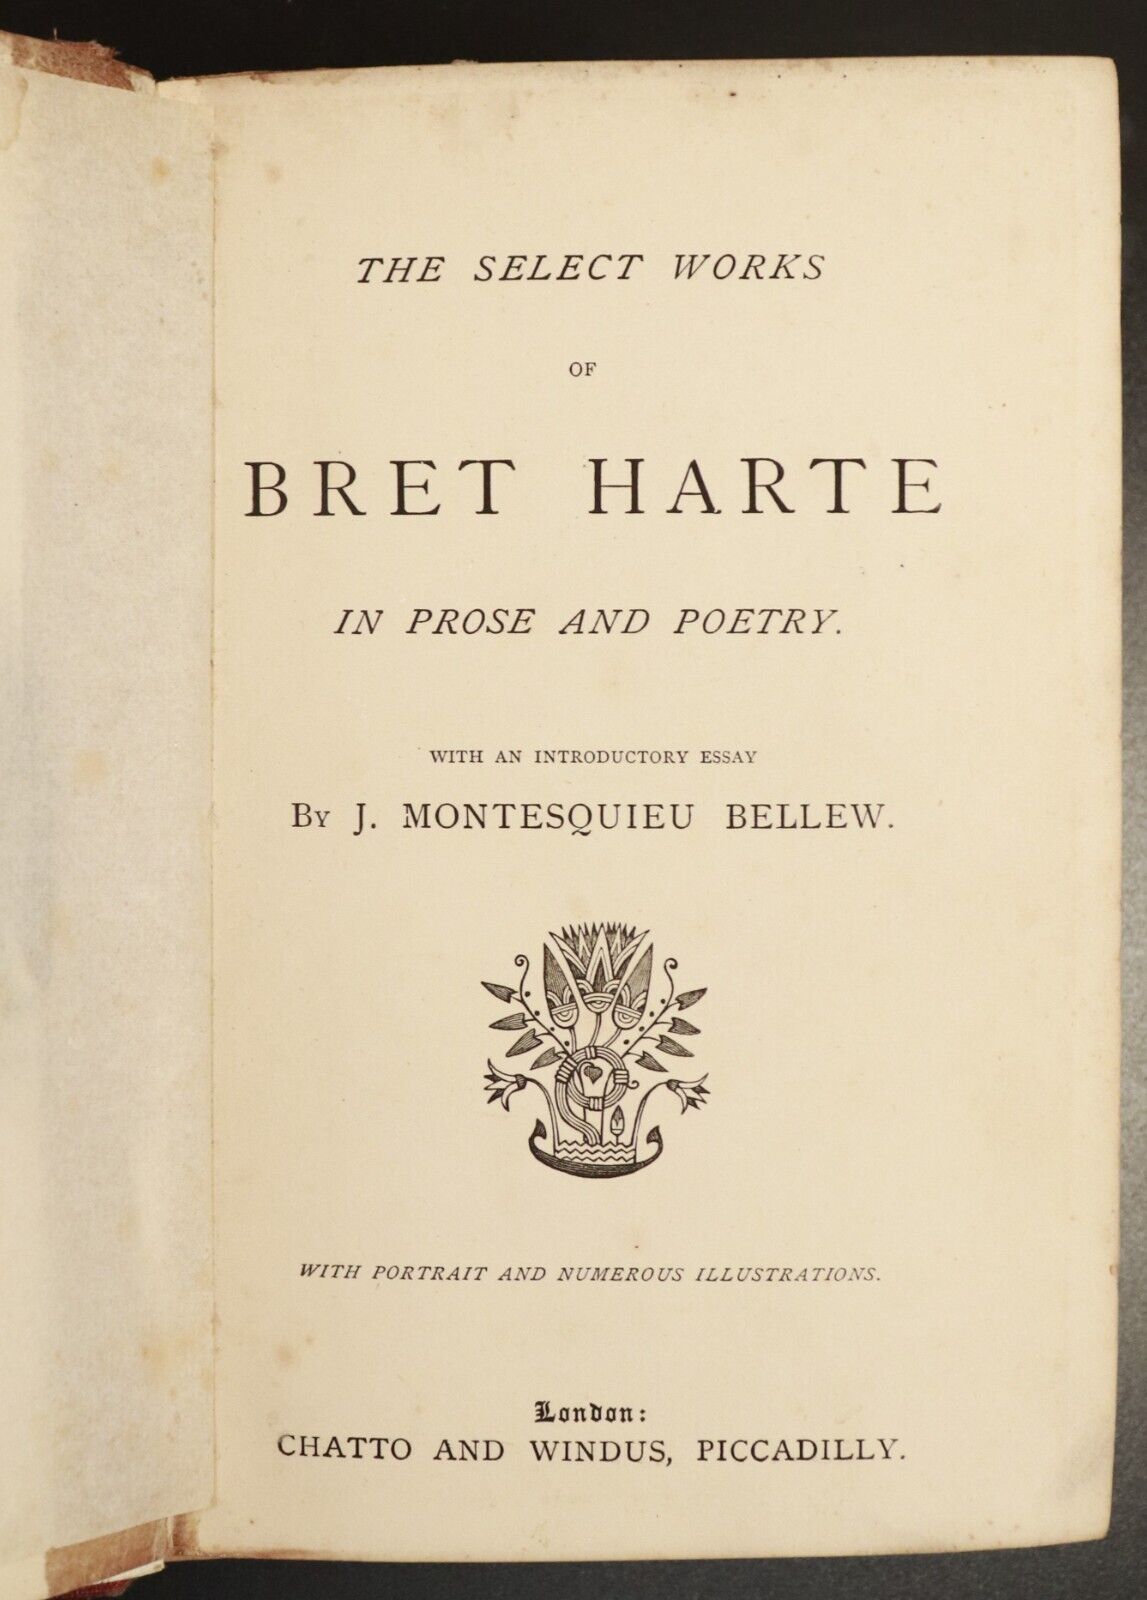 c1872 Works Of Bret Harte In Prose & Poetry Antique American Literature Book - 0